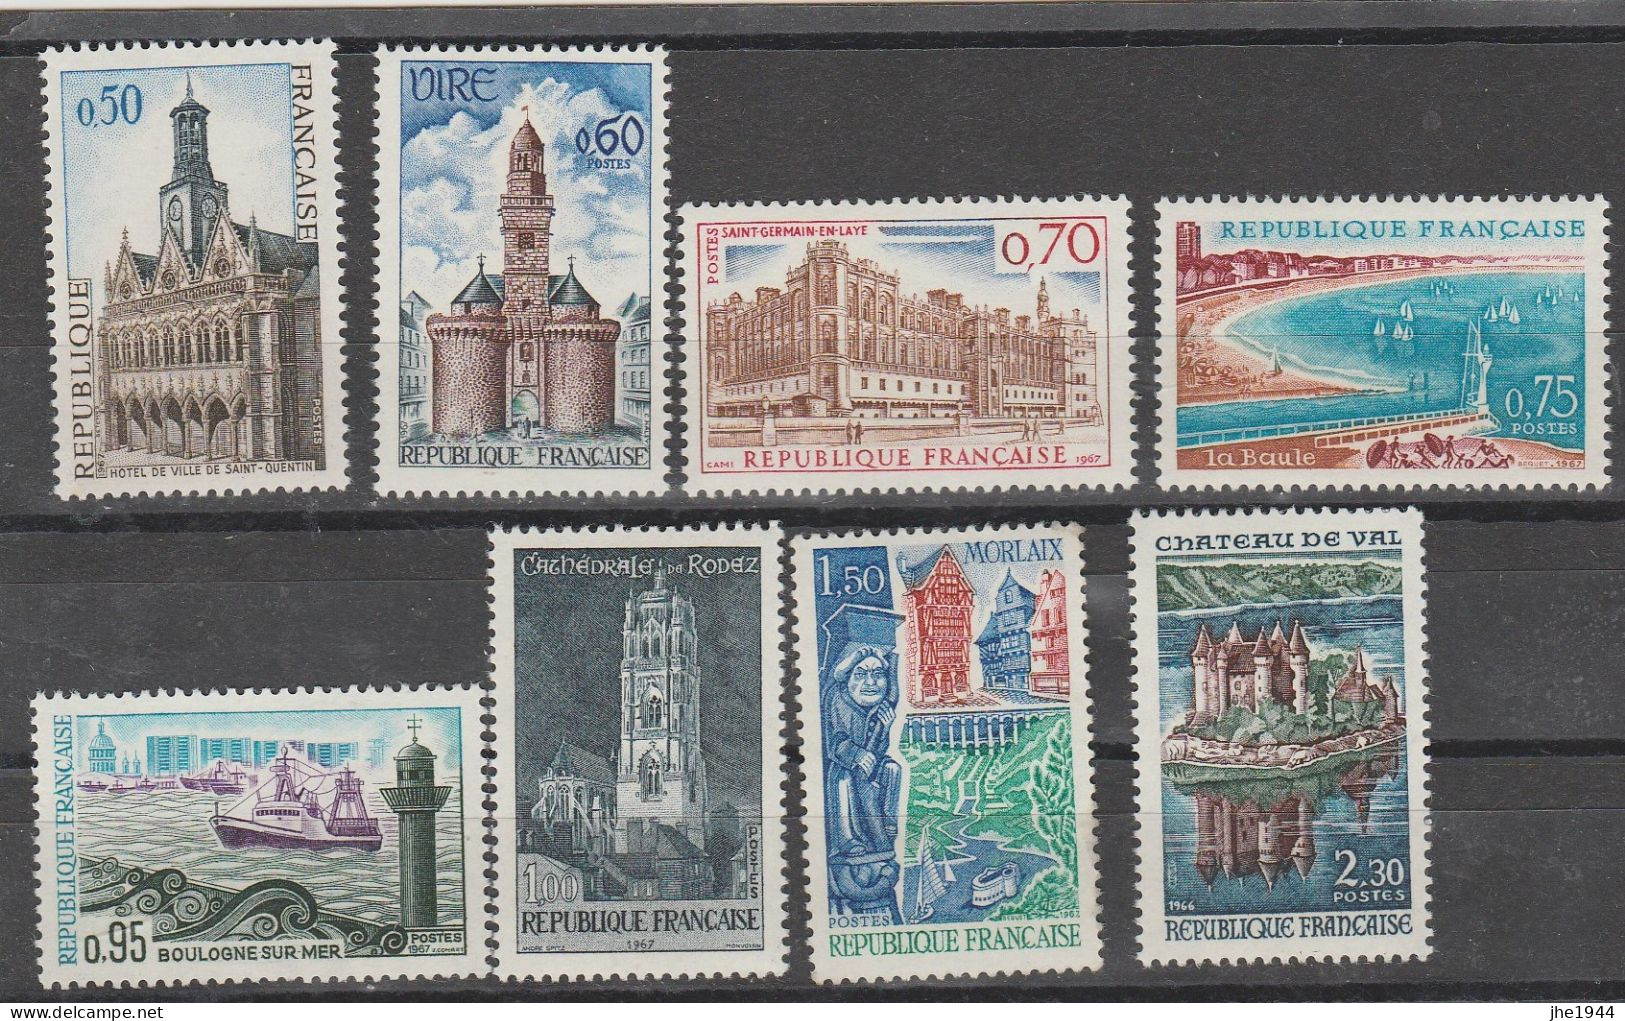 France N° 1499 à 1506 ** Monuments Et Sites - Unused Stamps